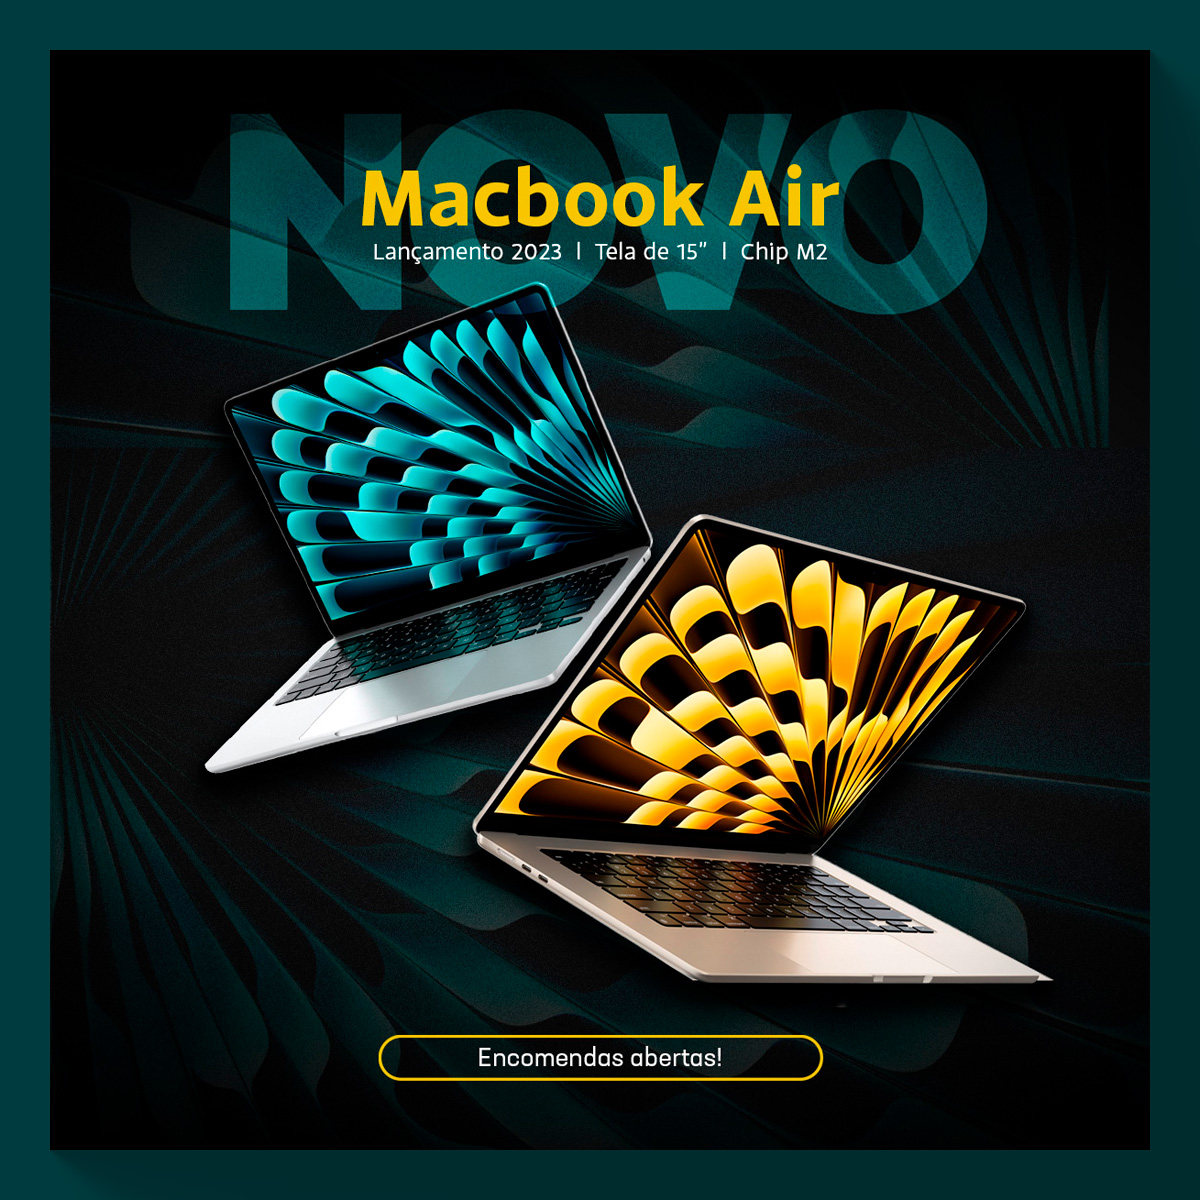 Macbook Air 15" 2023 Apple PSD File Social Media Design Post Template cover image.